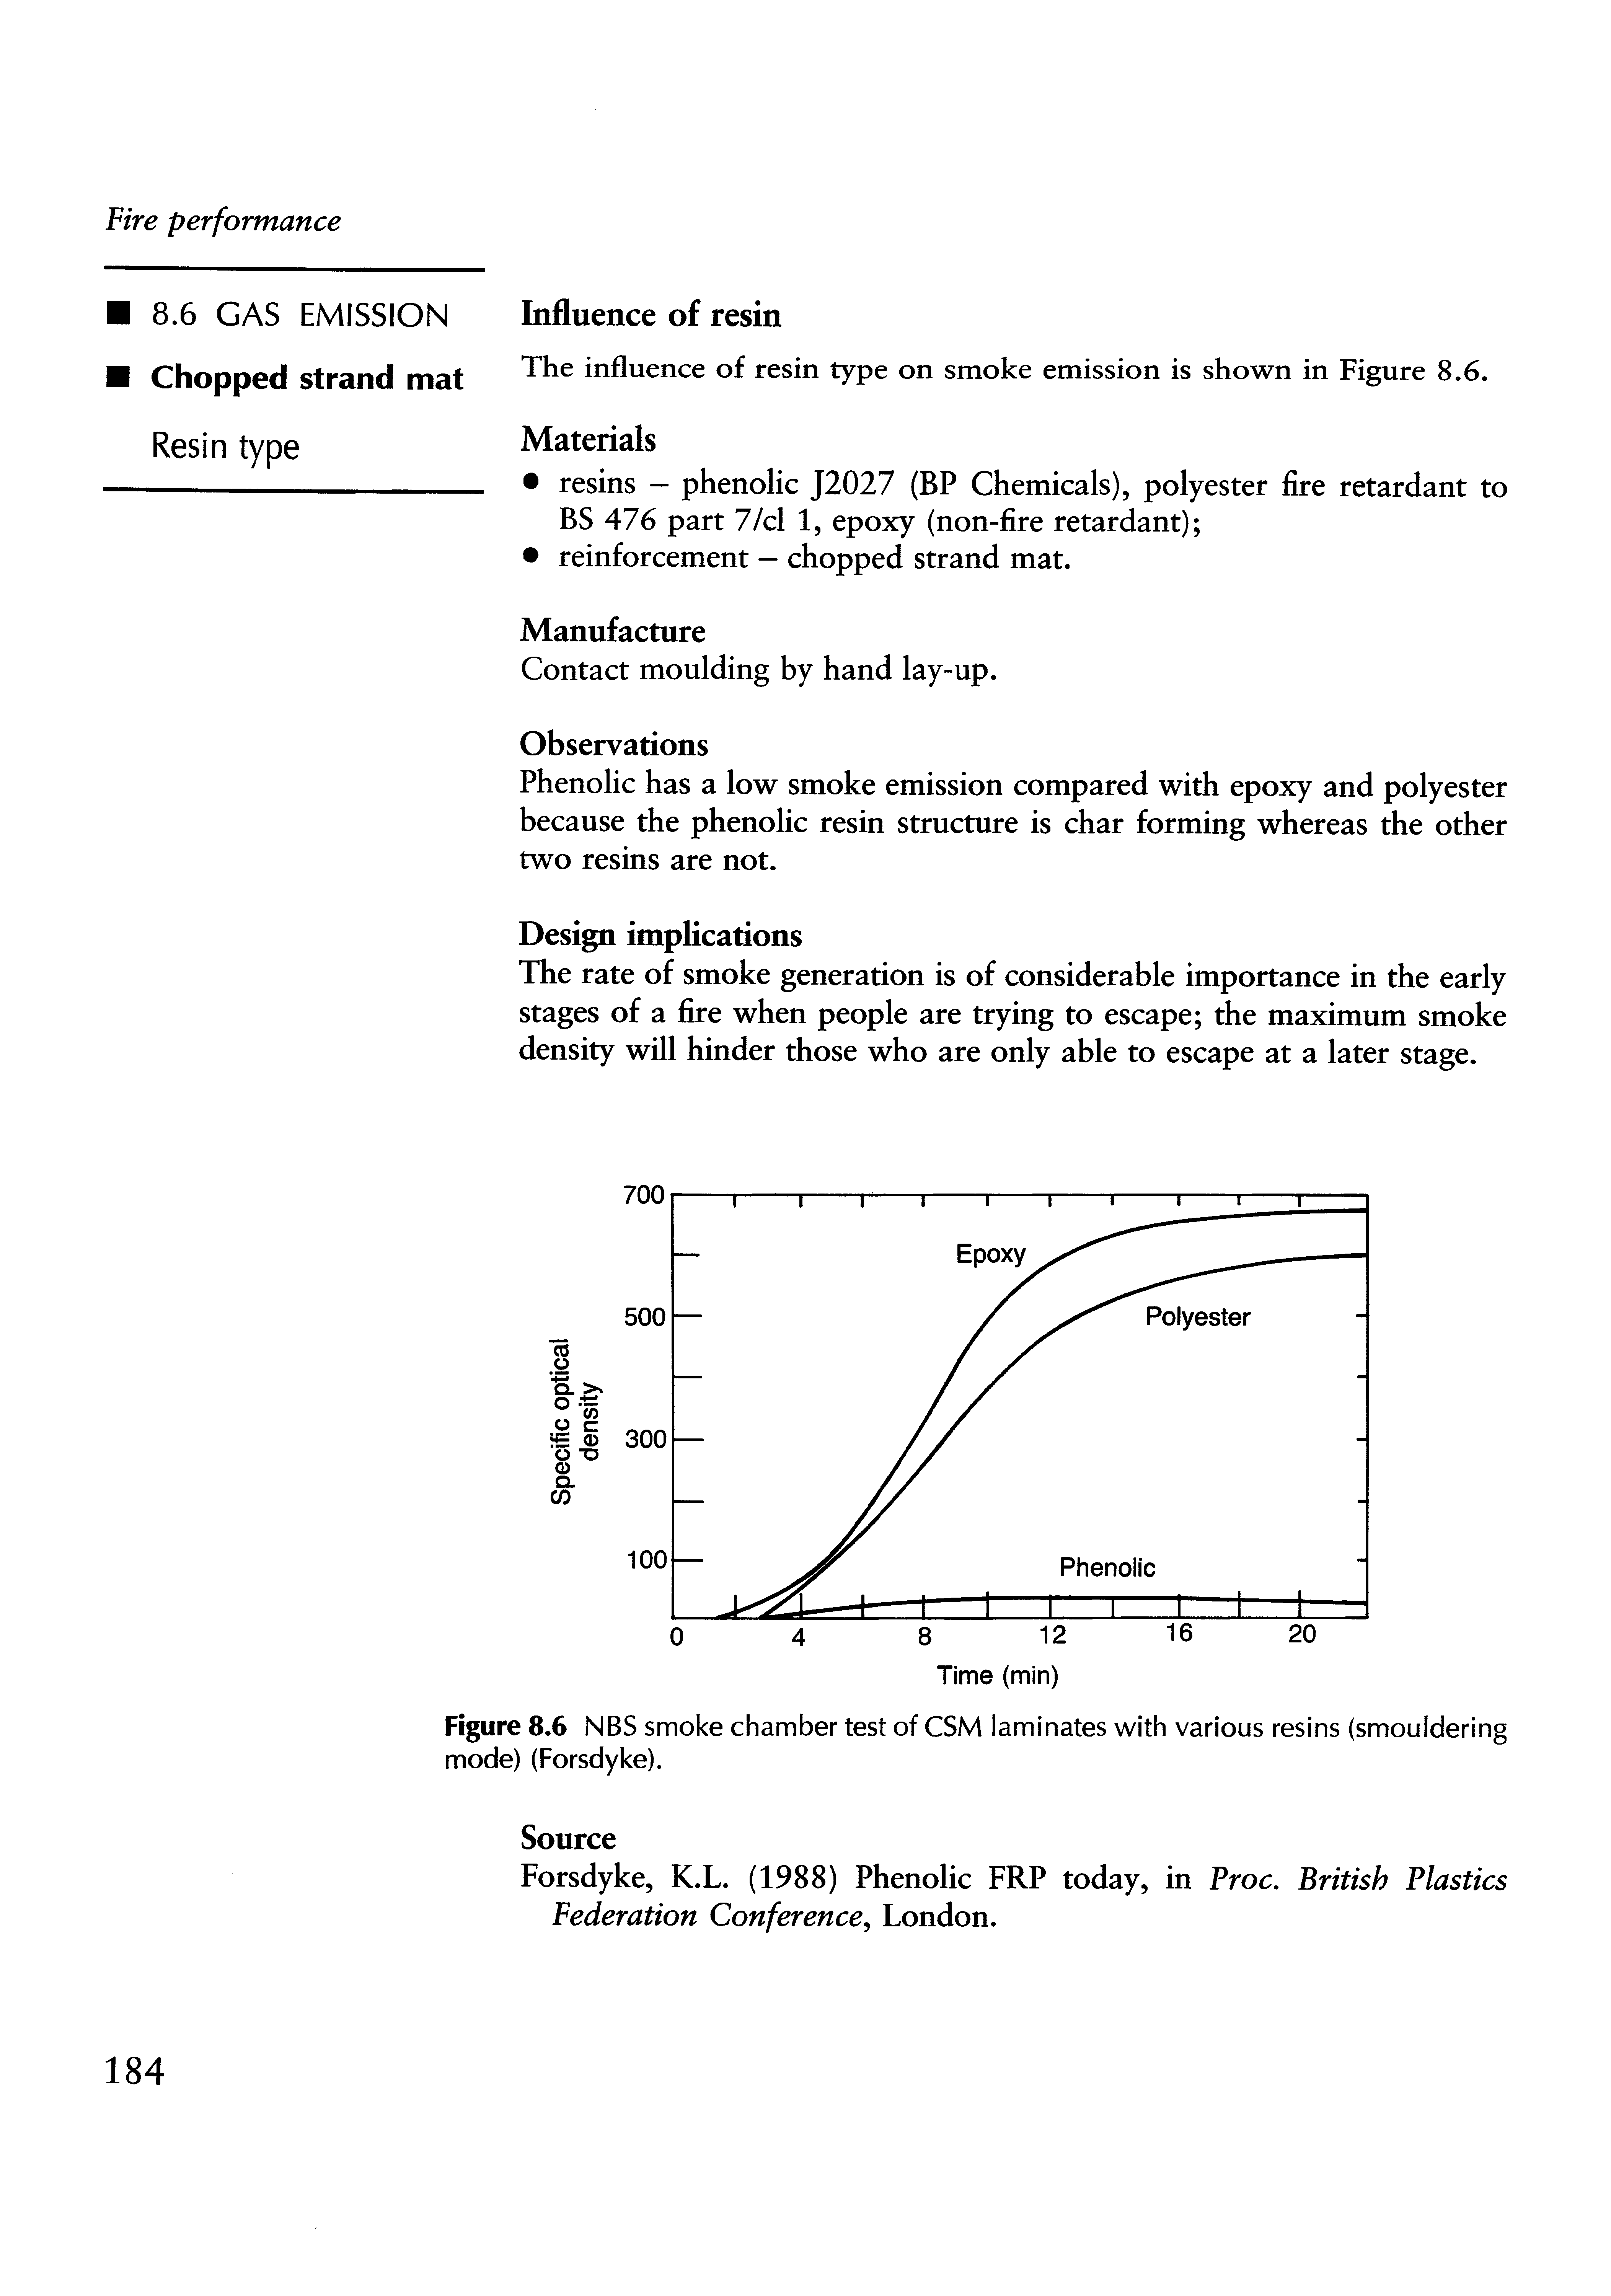 Figure 8.6 NBS smoke chamber test of CSM laminates with various resins (smouldering mode) (Forsdyke).